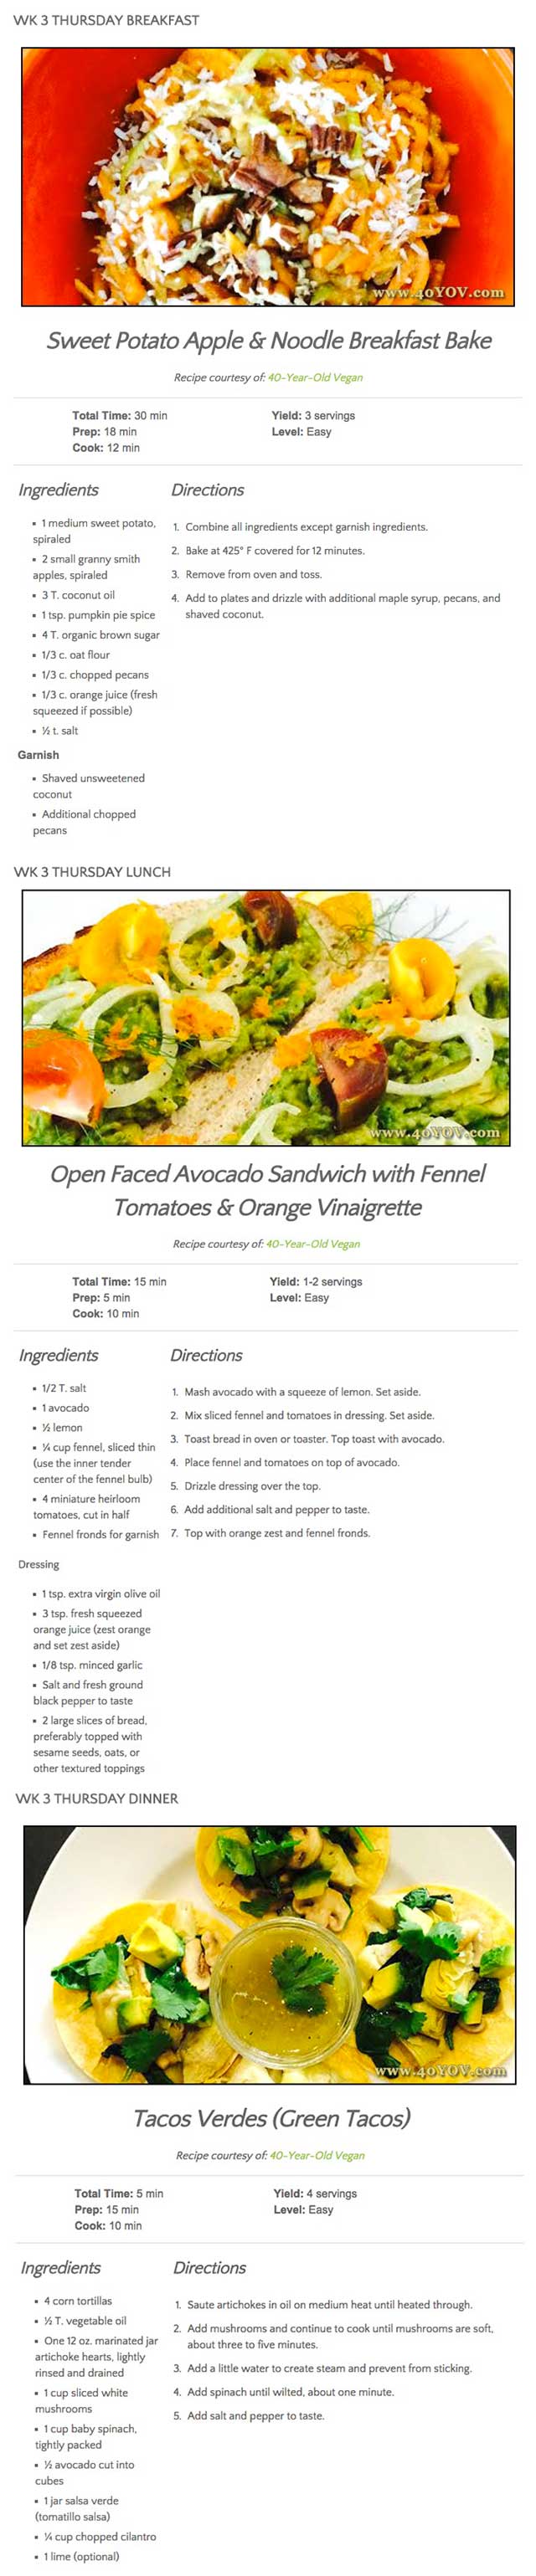 vegan recipes, blog 128, One Community